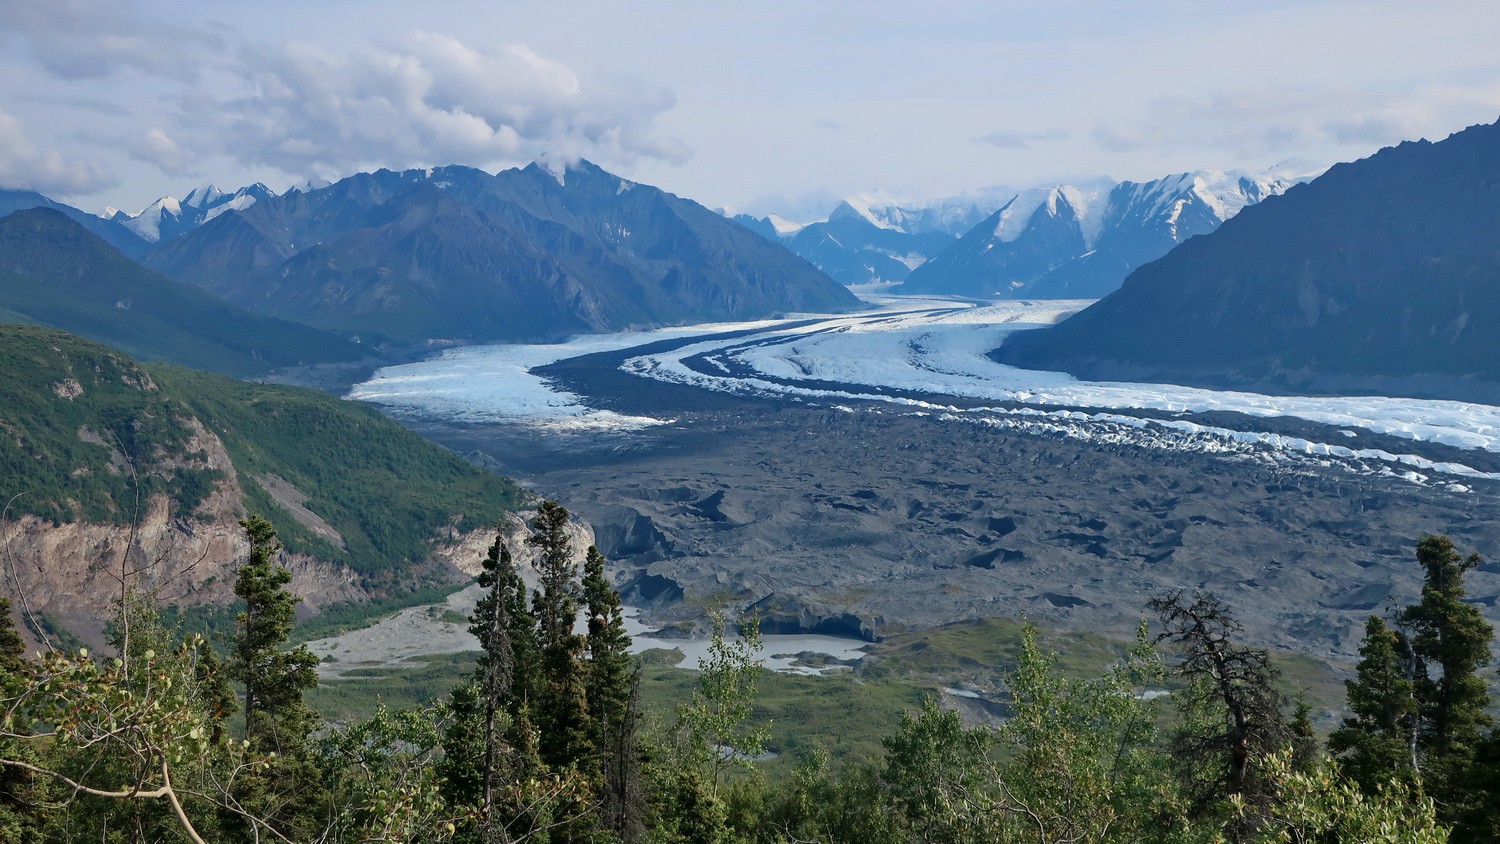 Huge Matanuska Glacier seen from 971 meters high Lion's Head